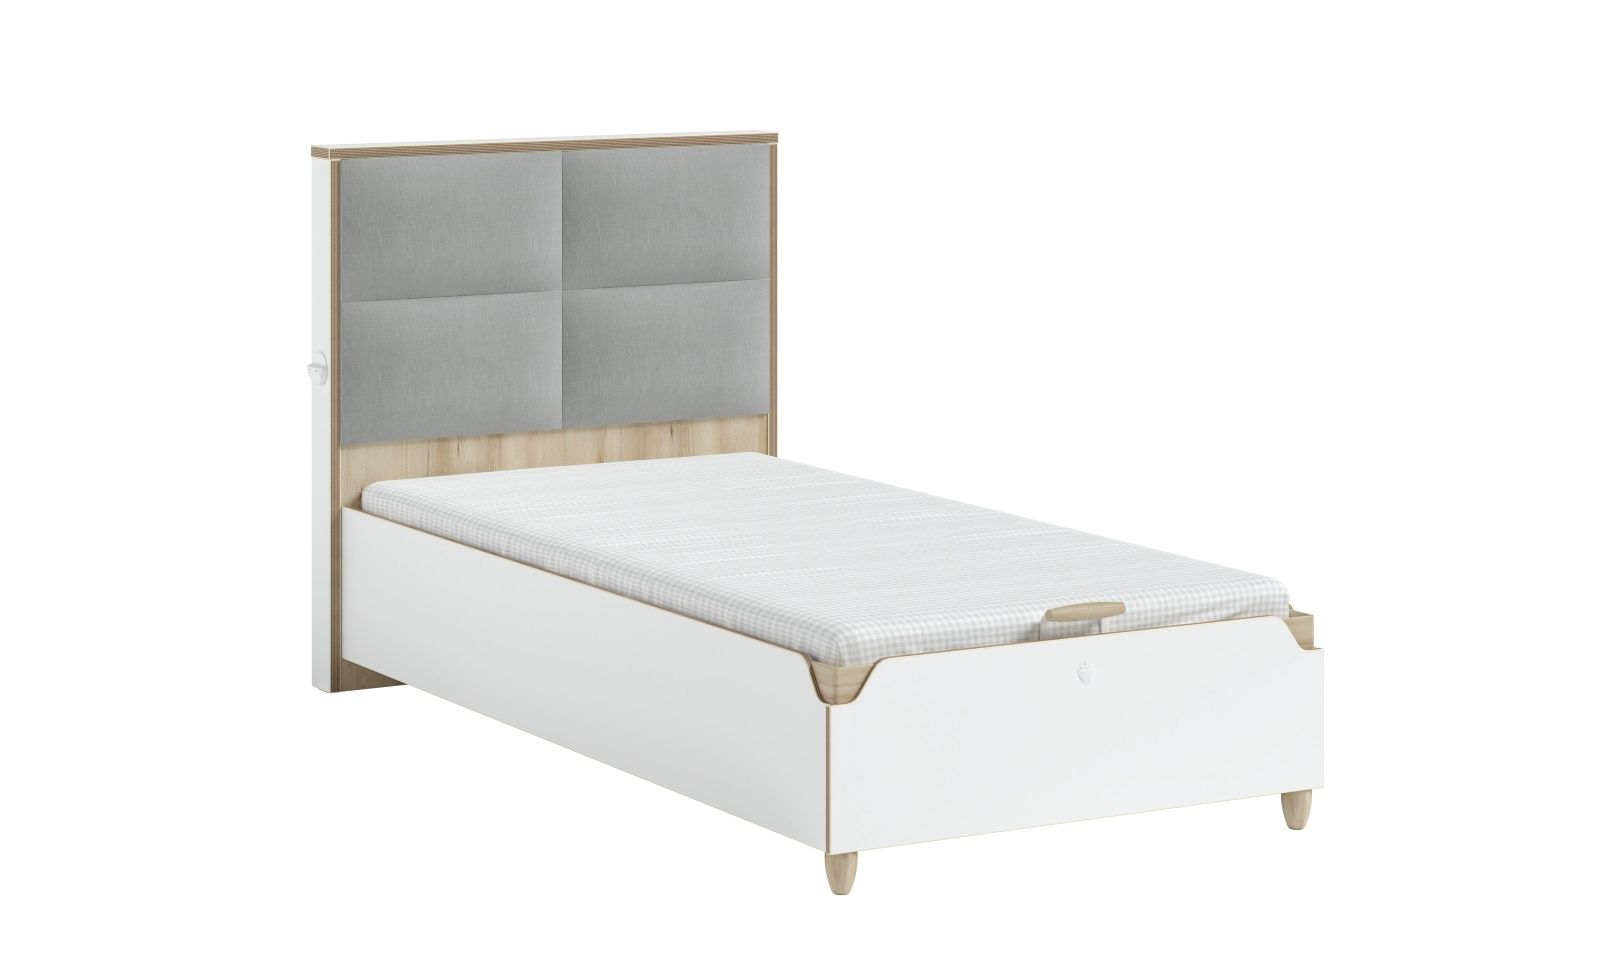 Studentská postel 100x200cm s úložným prostorem Dylan - bílá/dub světlý - Nábytek Harmonia s.r.o.